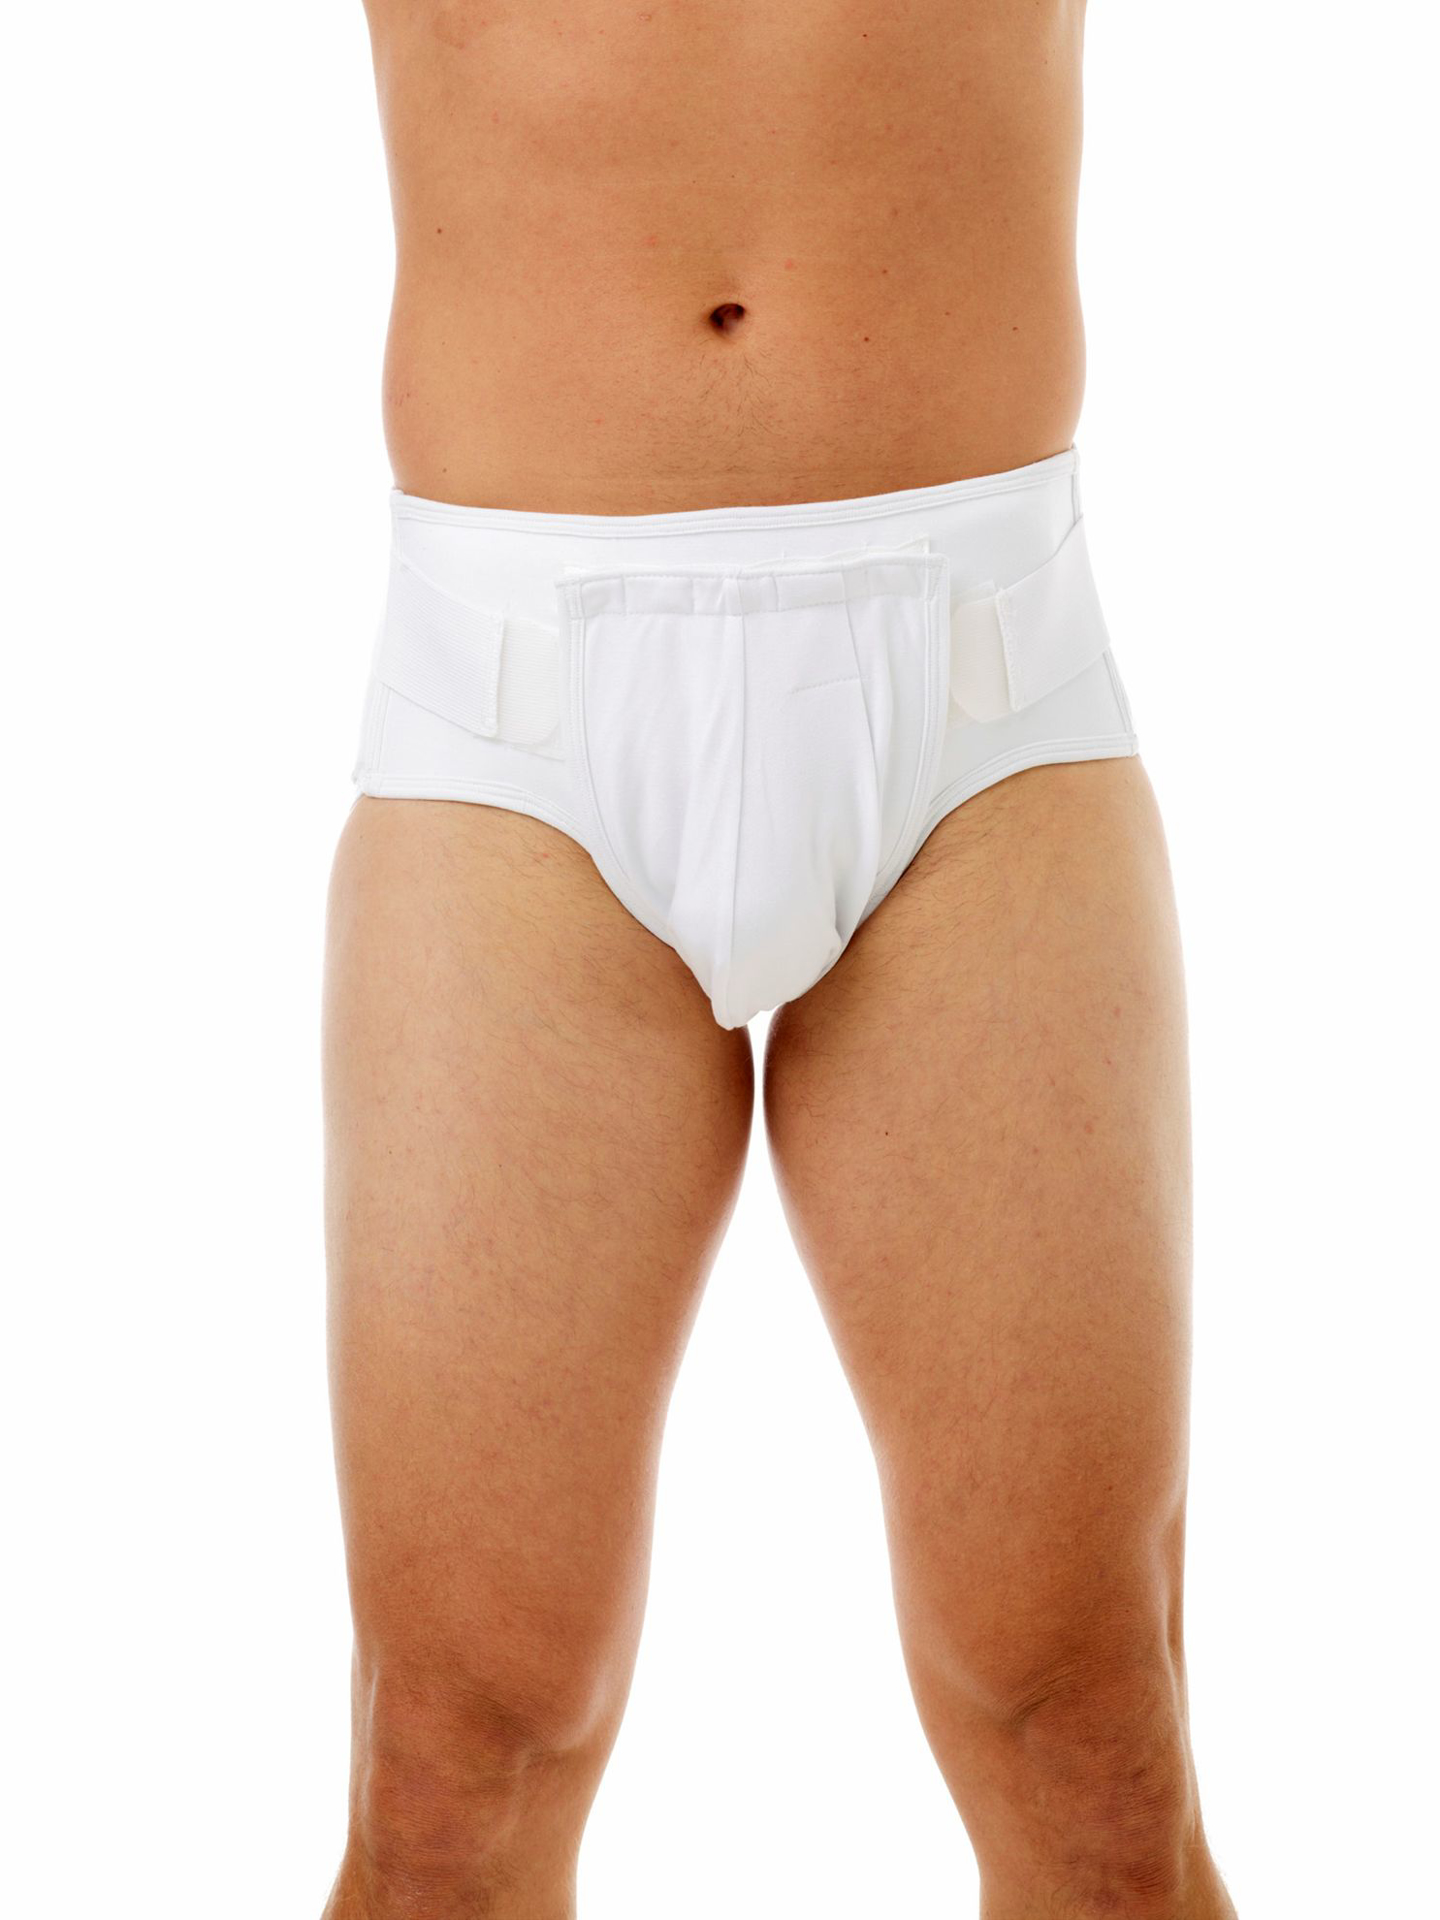 3 Pcs mens swimsuit Men's Panty Liner Underwear Enhancing Pad Ftm